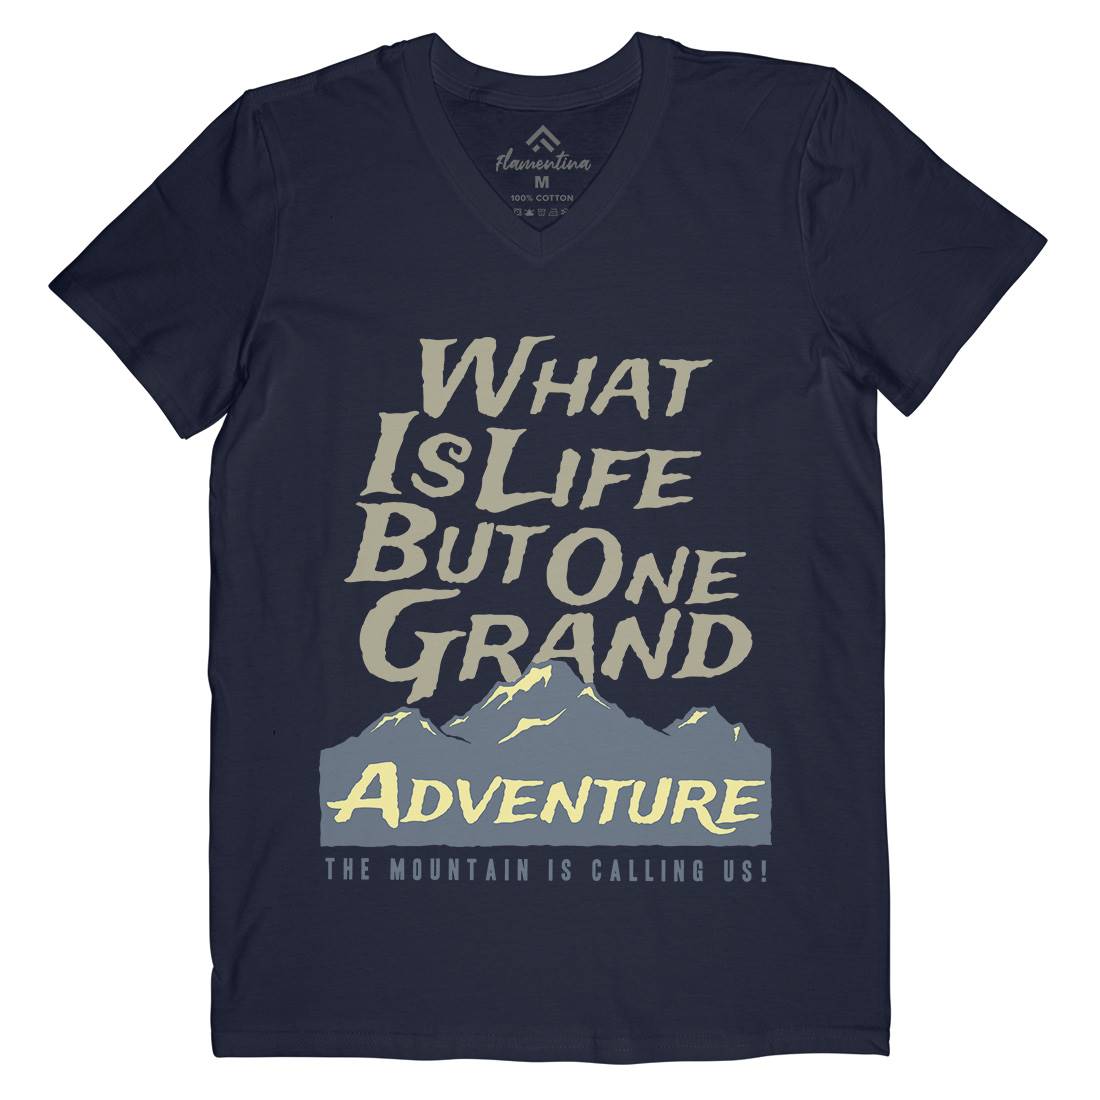 Great Adventure Mens Organic V-Neck T-Shirt Nature A321